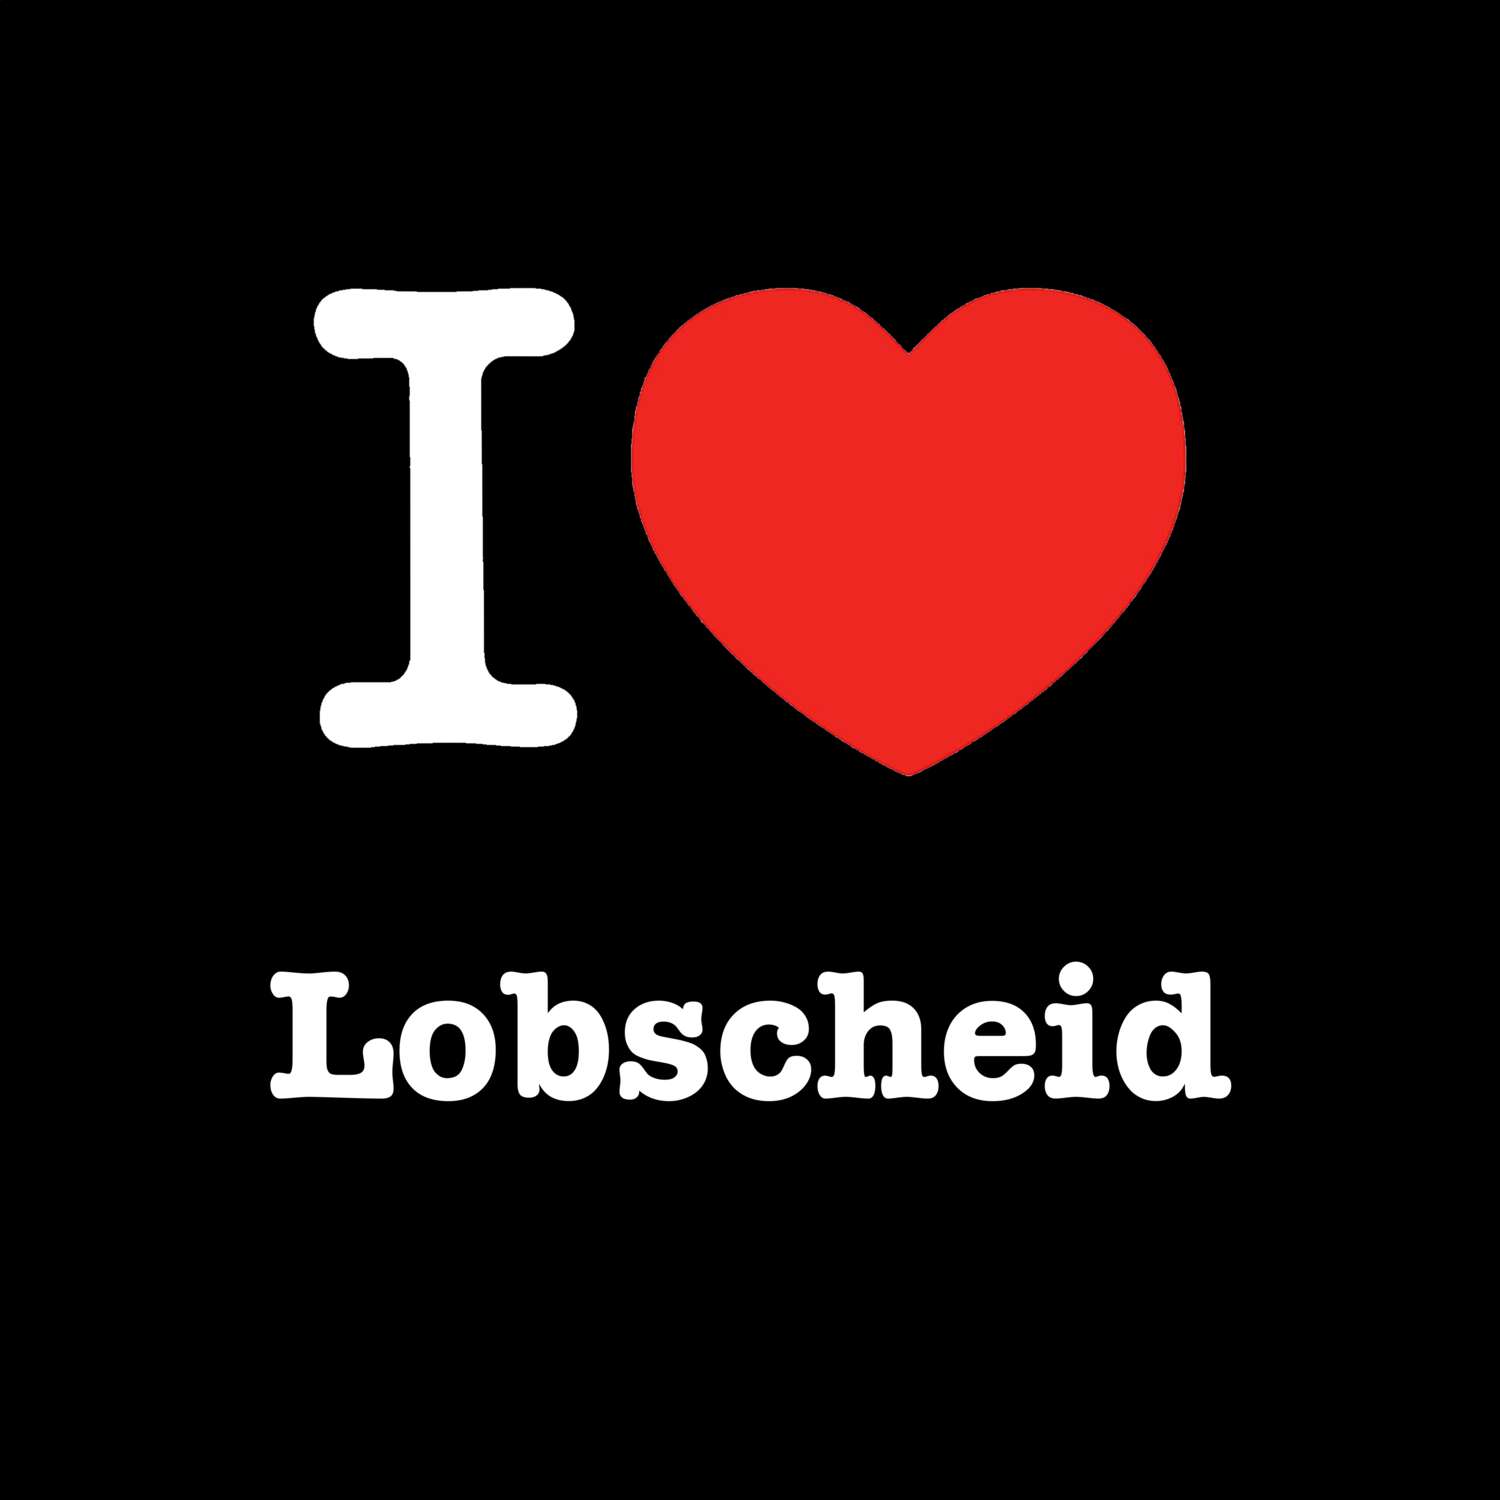 Lobscheid T-Shirt »I love«